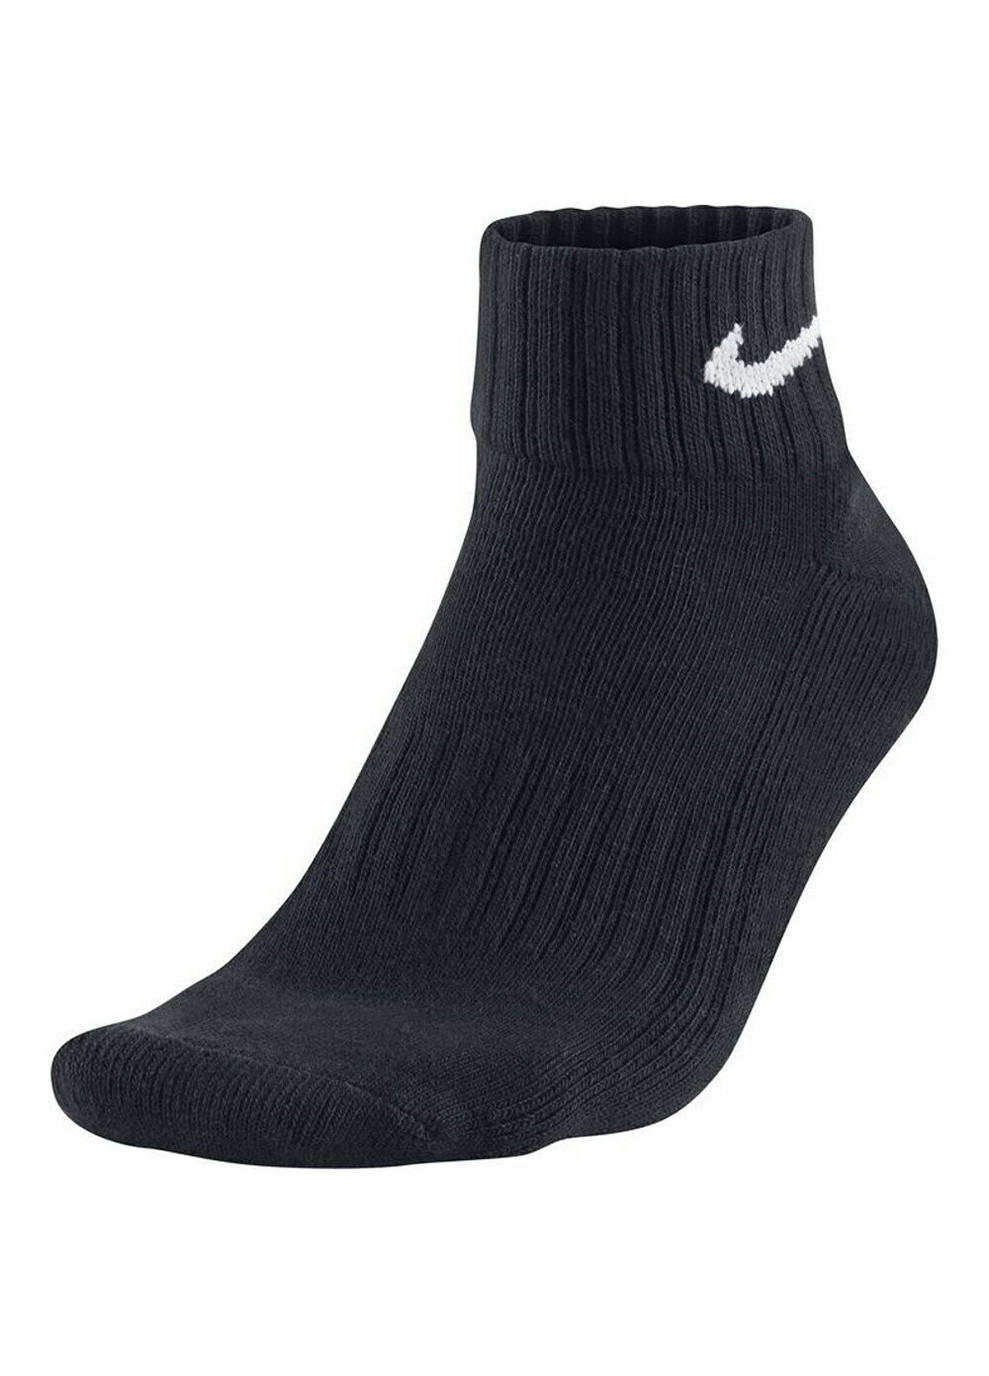 Носки Value Cush Ankle 3-pack black — SX4926-001 Nike (254342982)